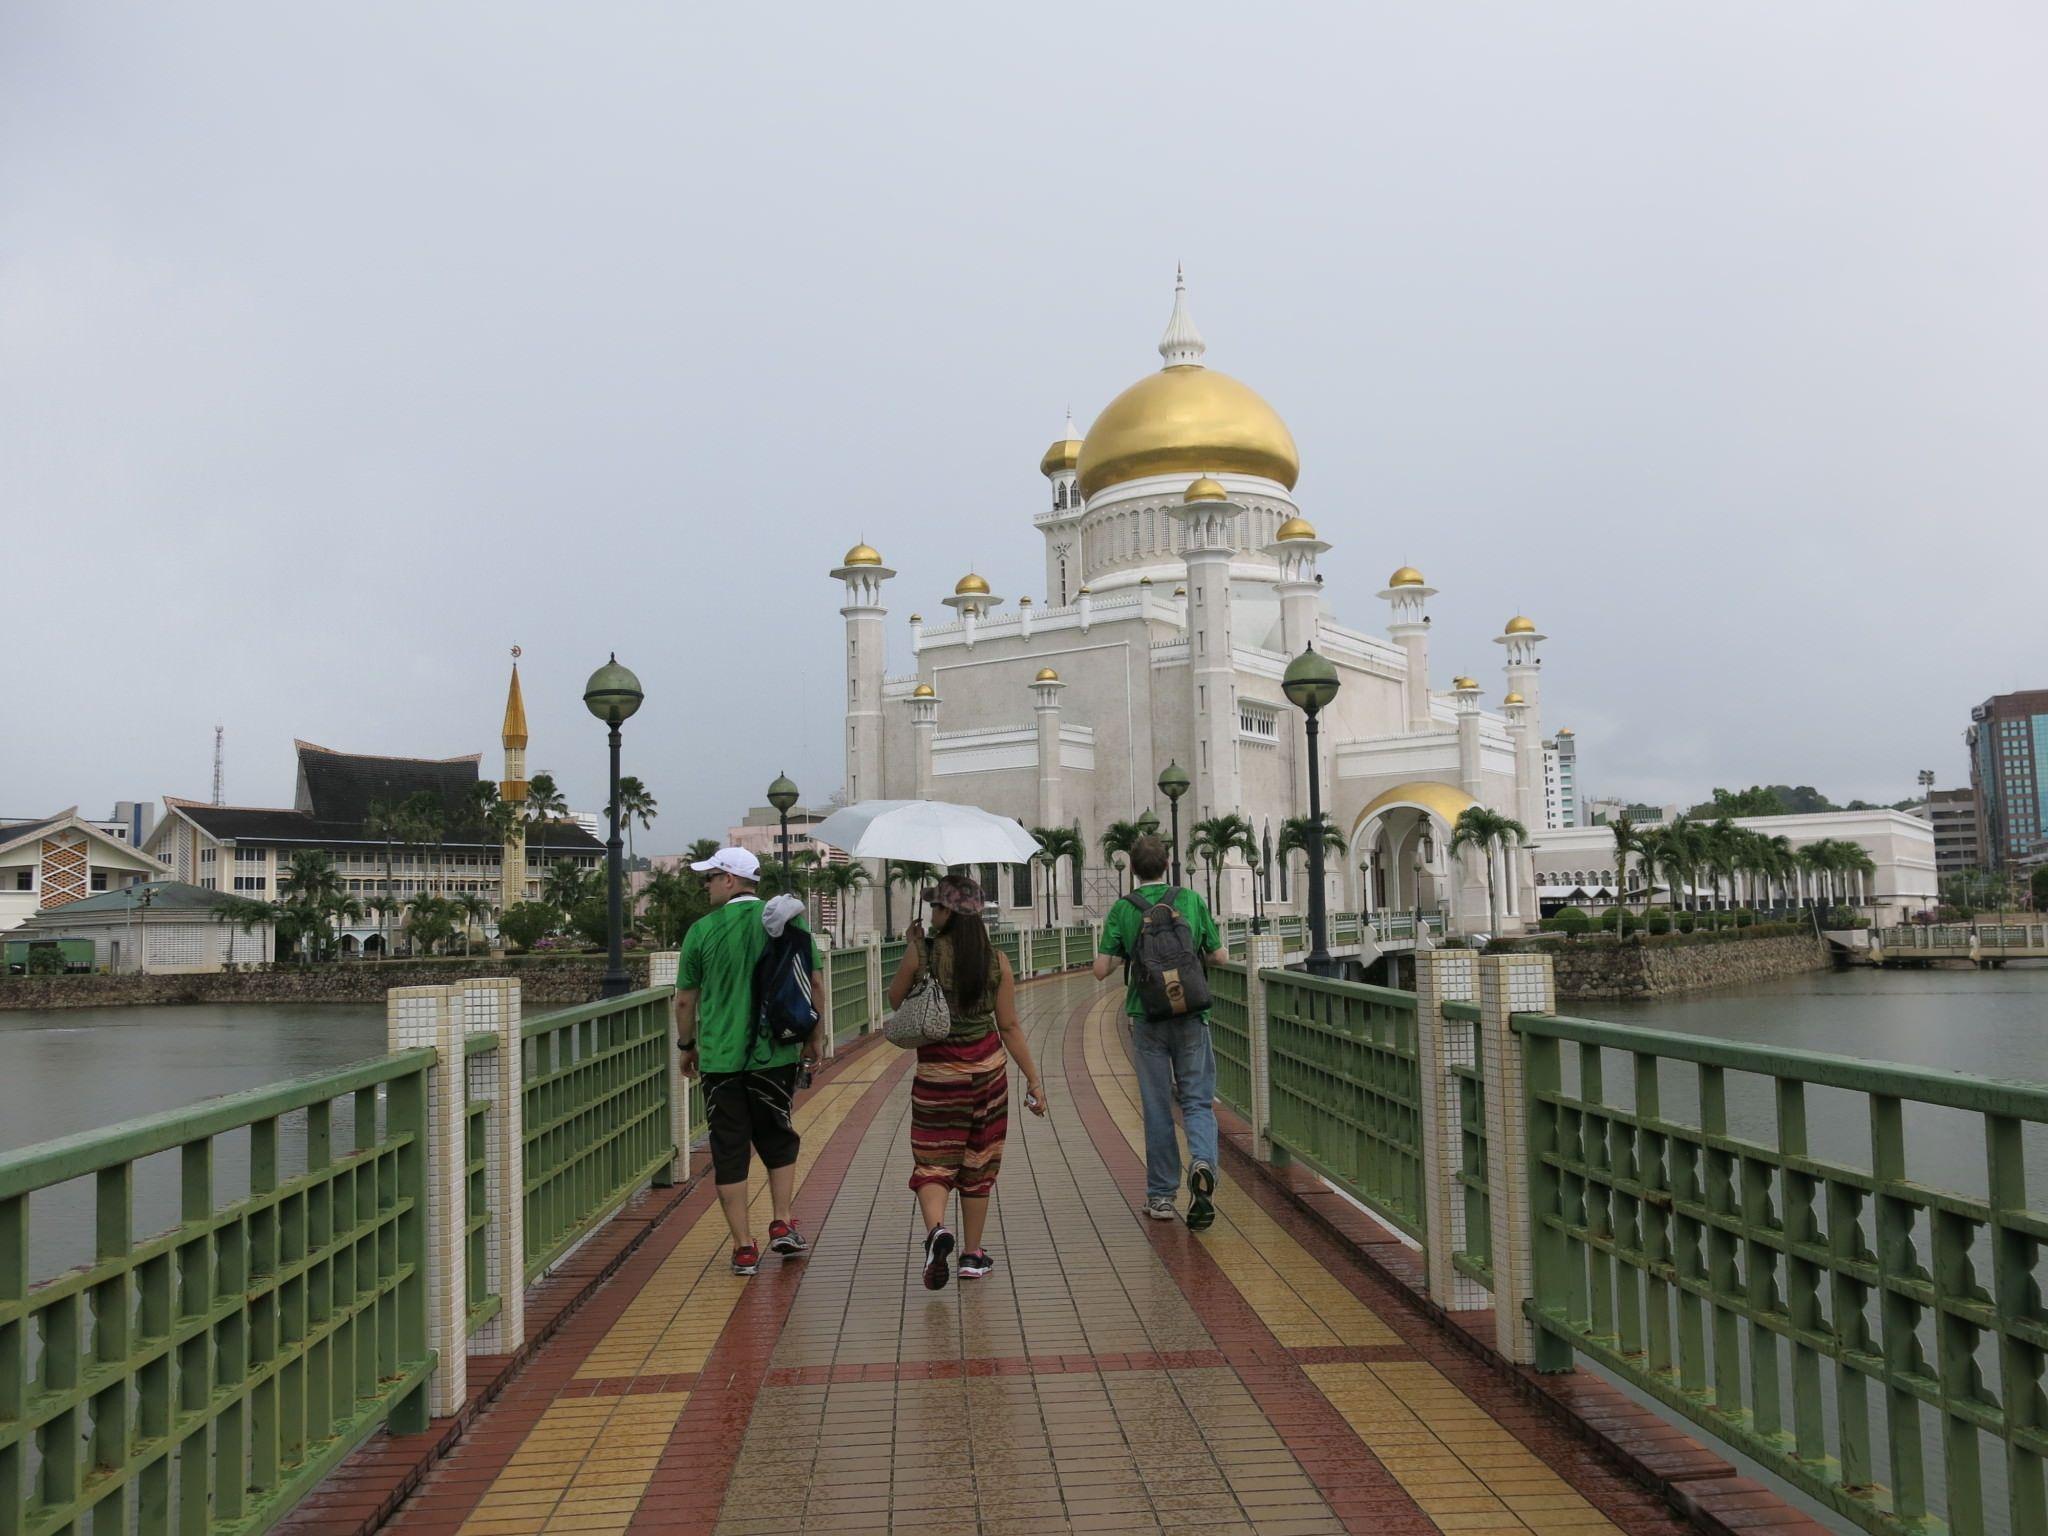 Visiting the Omar Ali Saifuddien Mosque in Bandar Seri Begawan